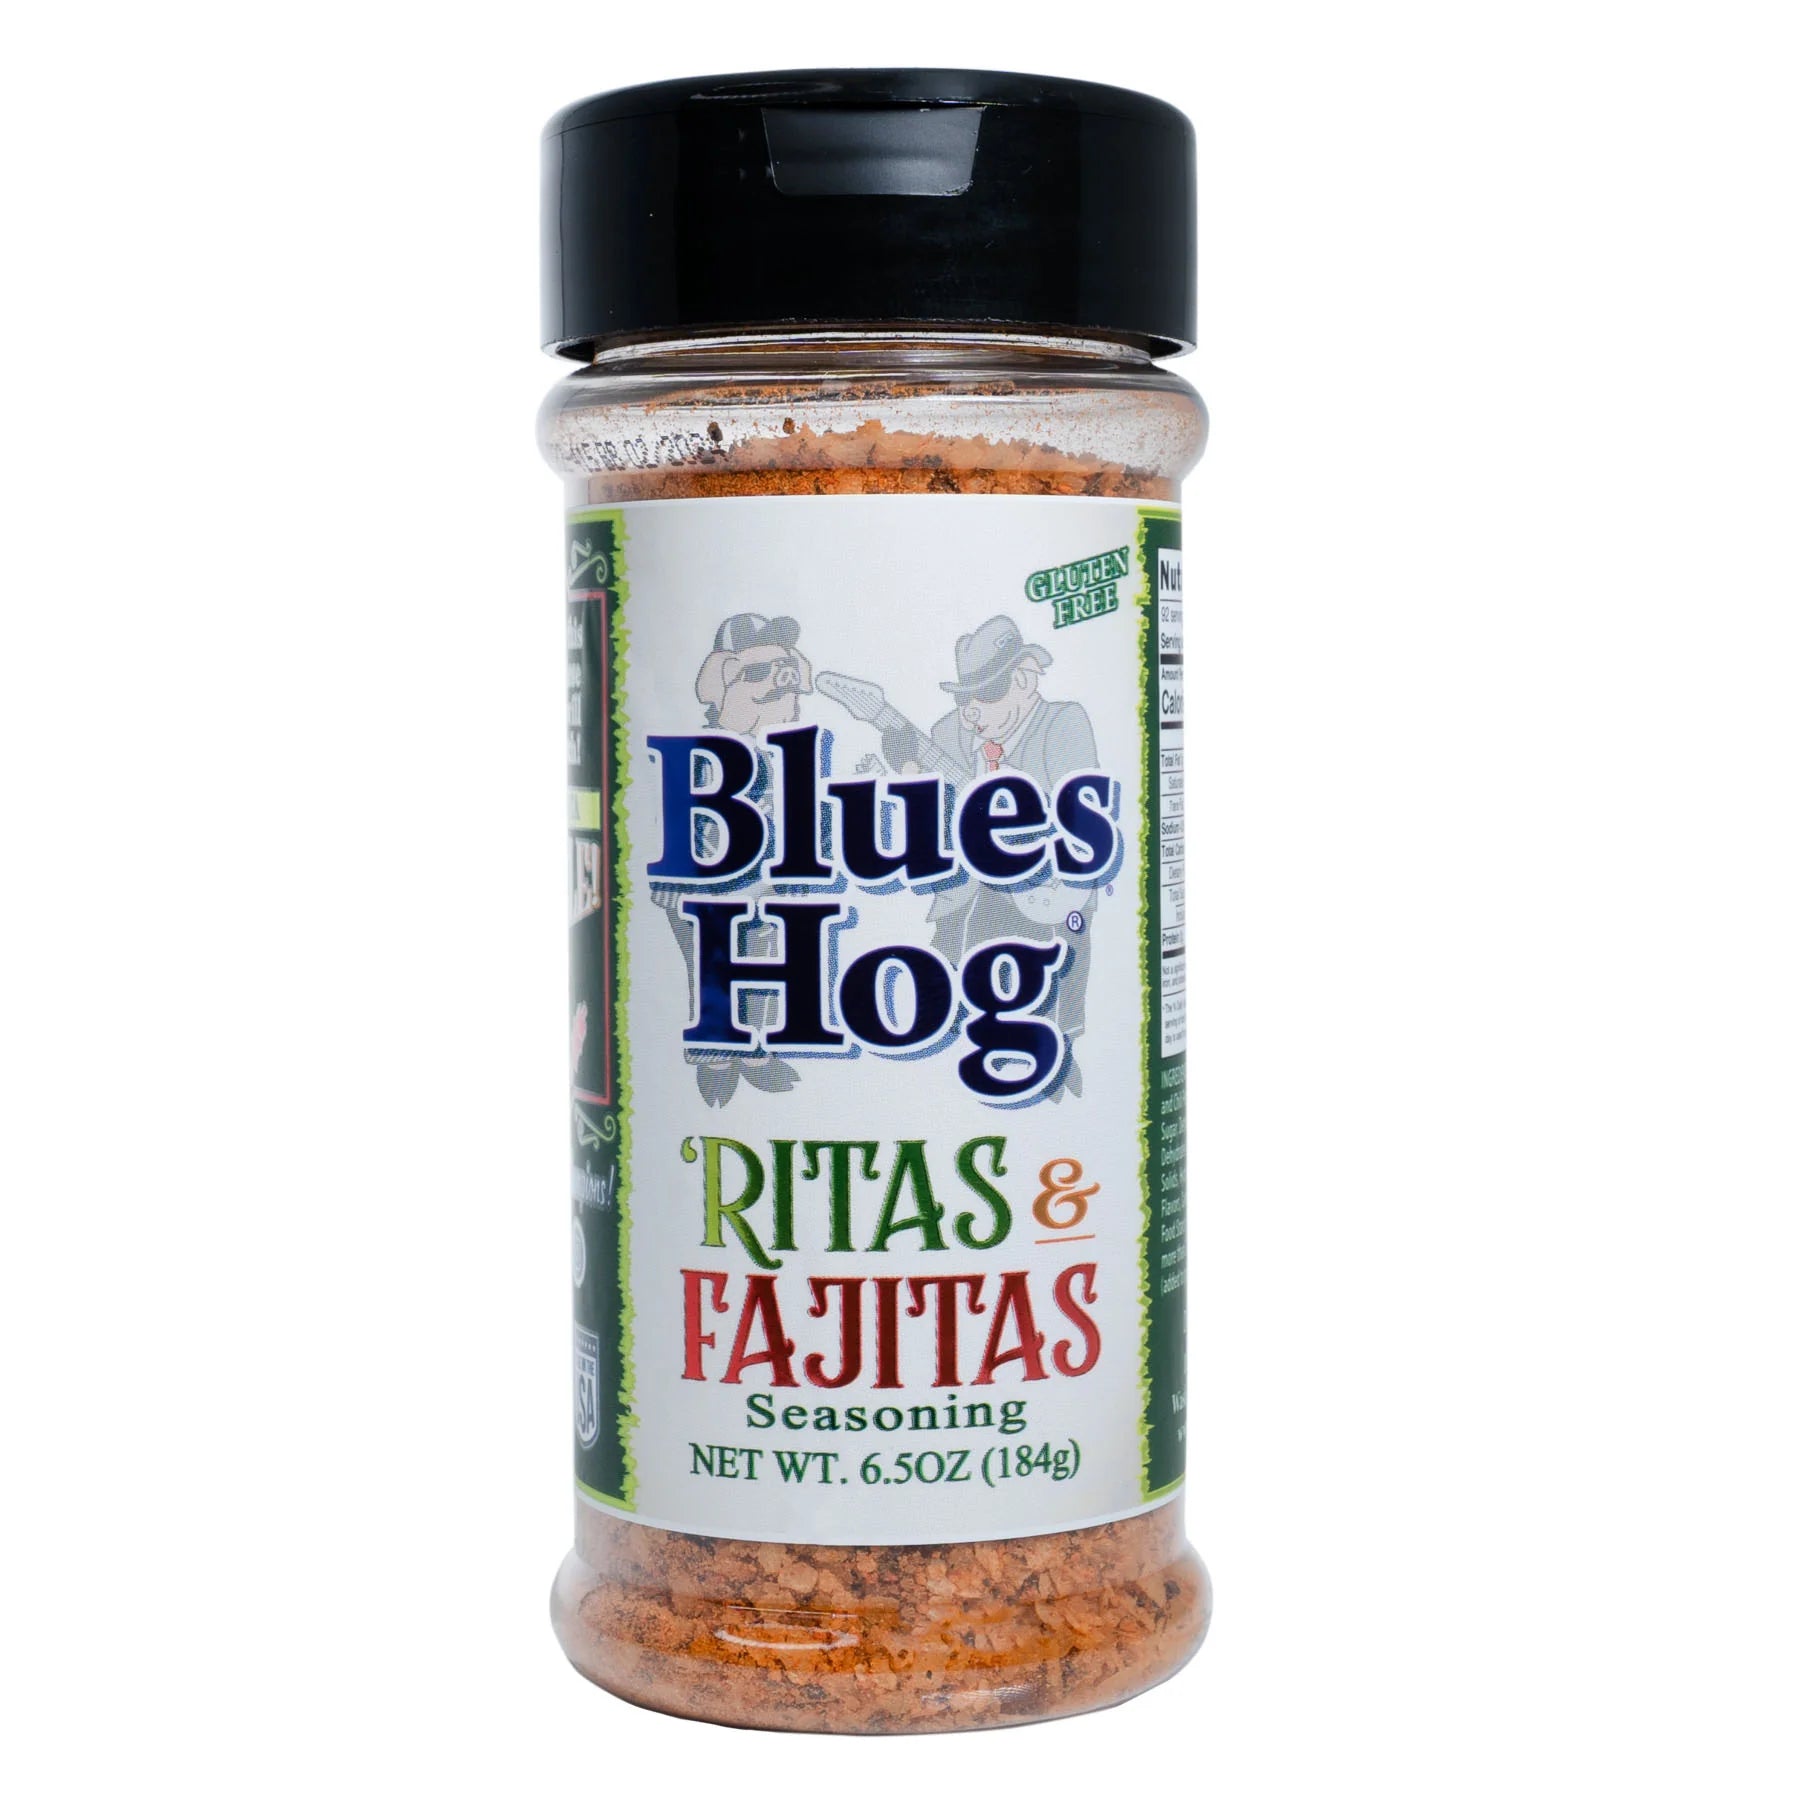 Blues Hog 'Ritas and Fajitas seasoning is gluten free. Net wt. 6.5 oz.